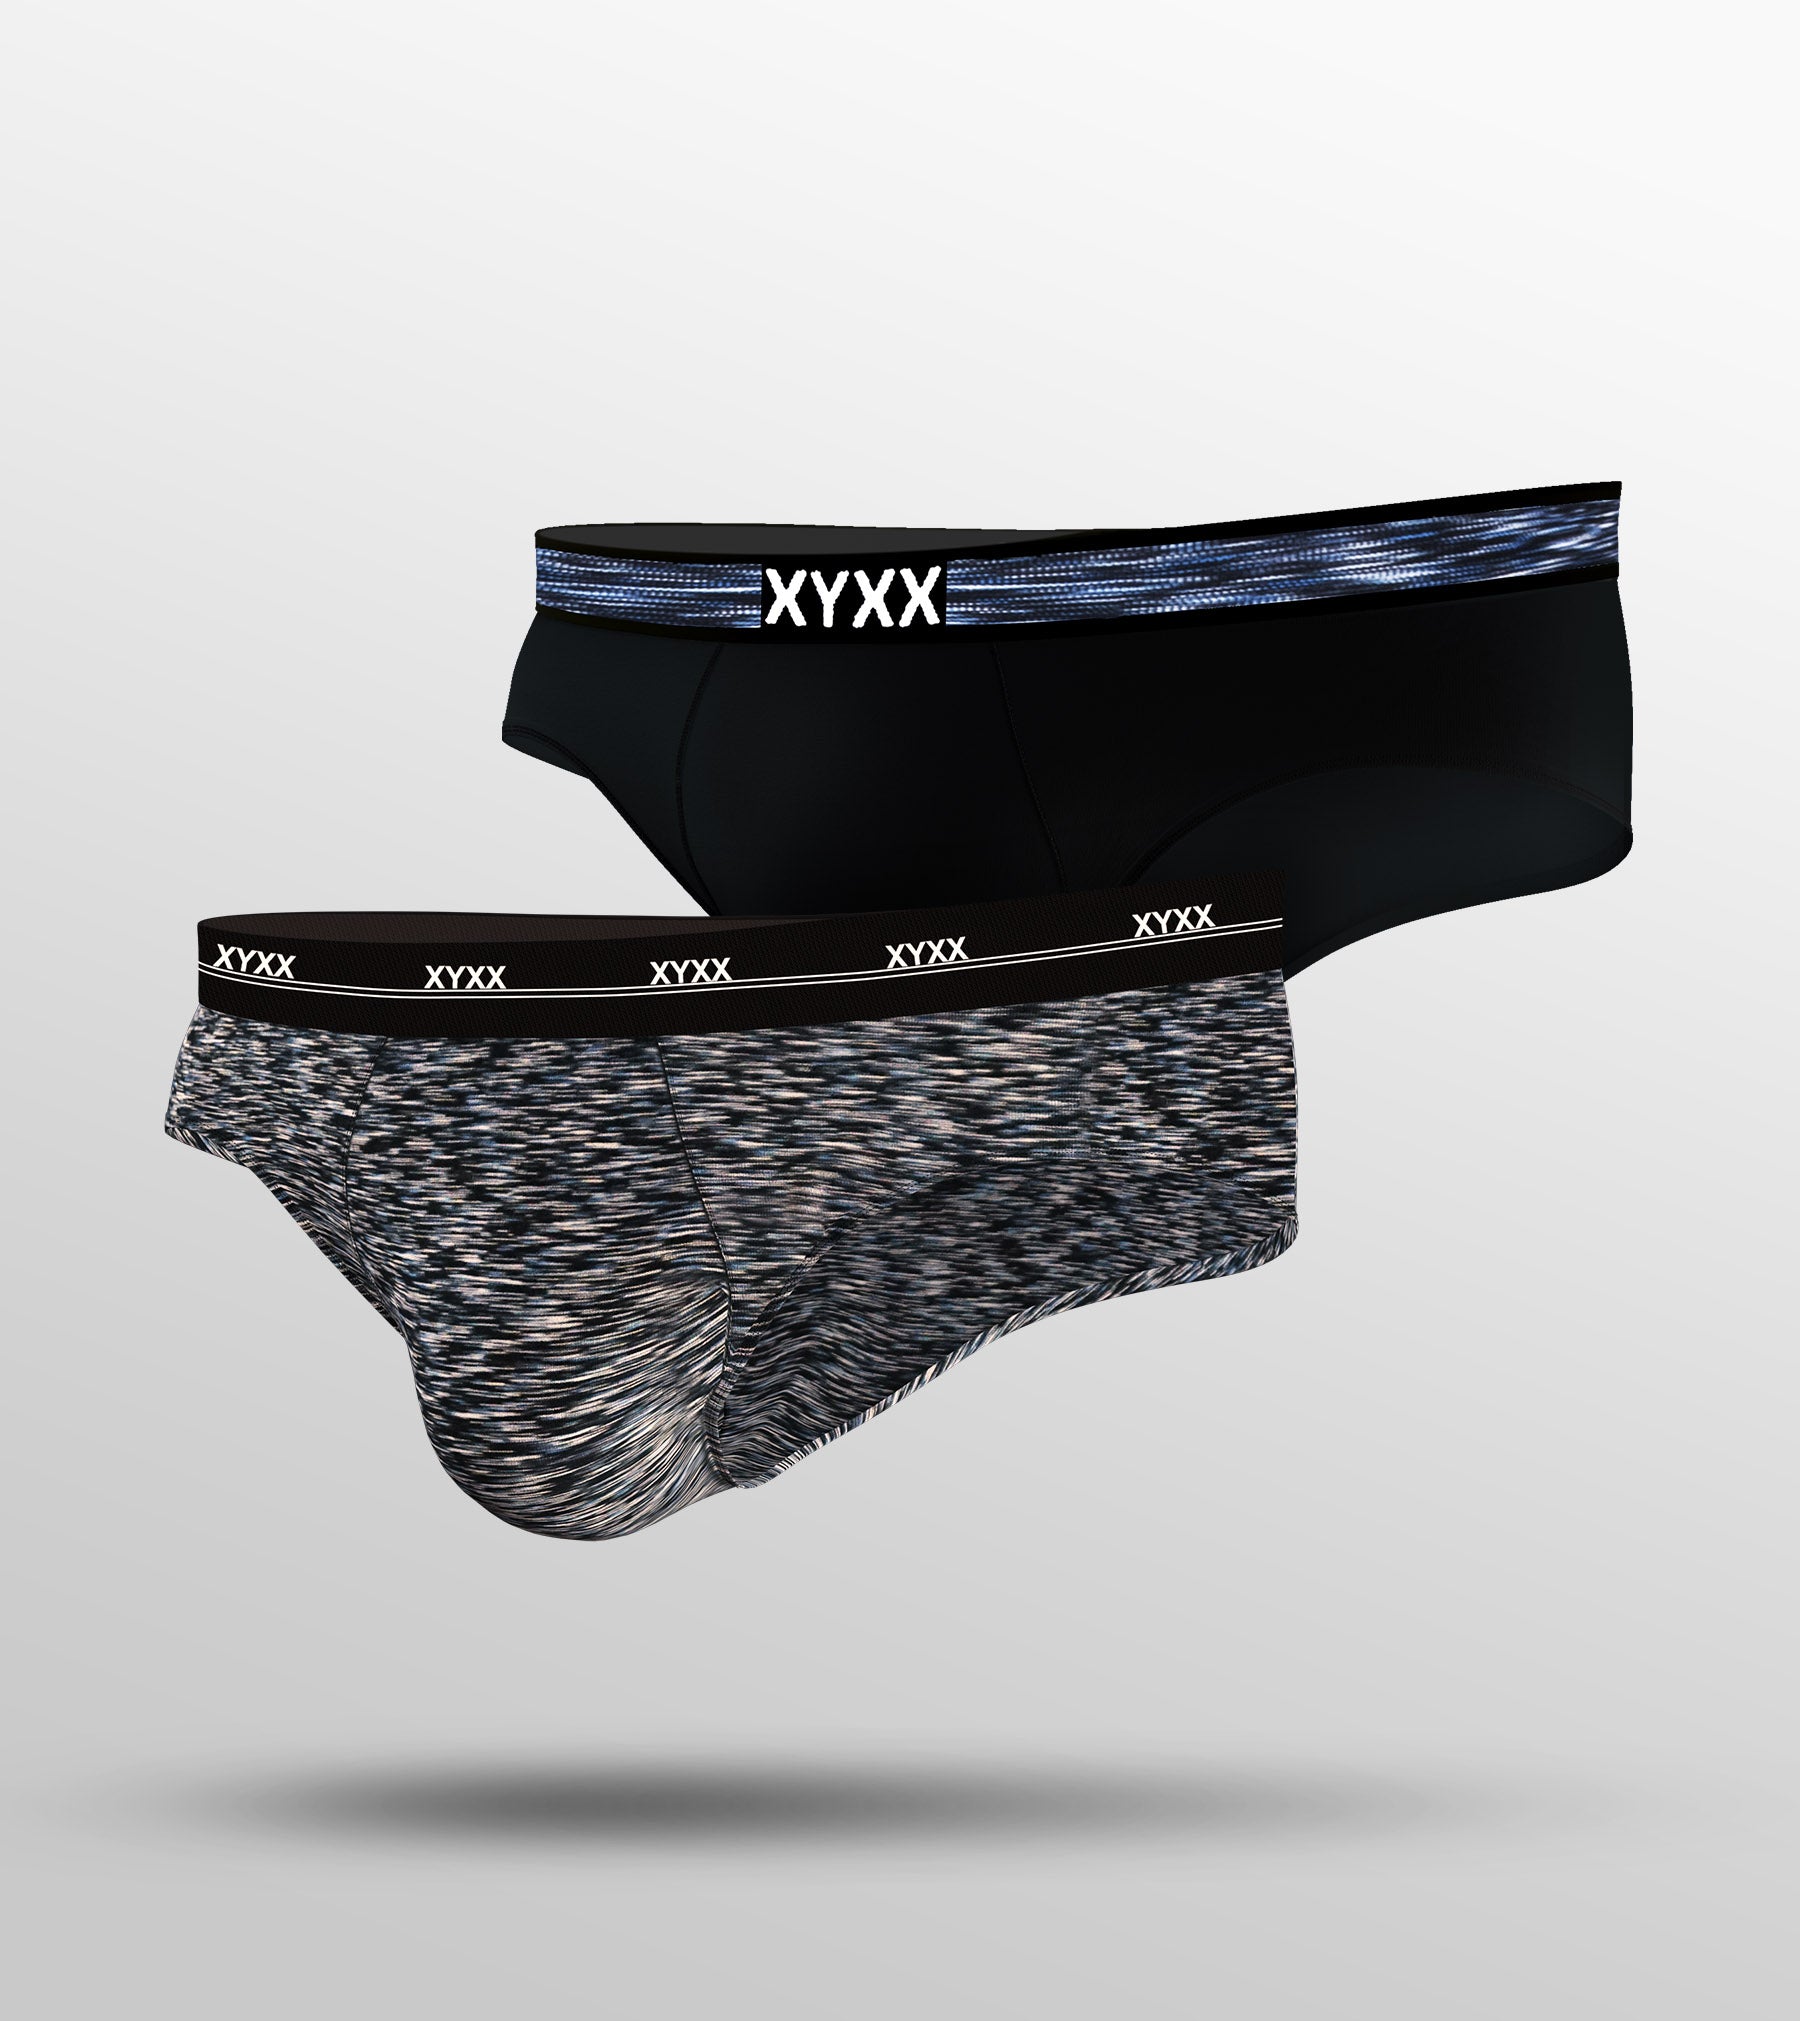 Tencel Modal Briefs For Men Pack of 2 (All Black) -  XYXX Mens Apparels